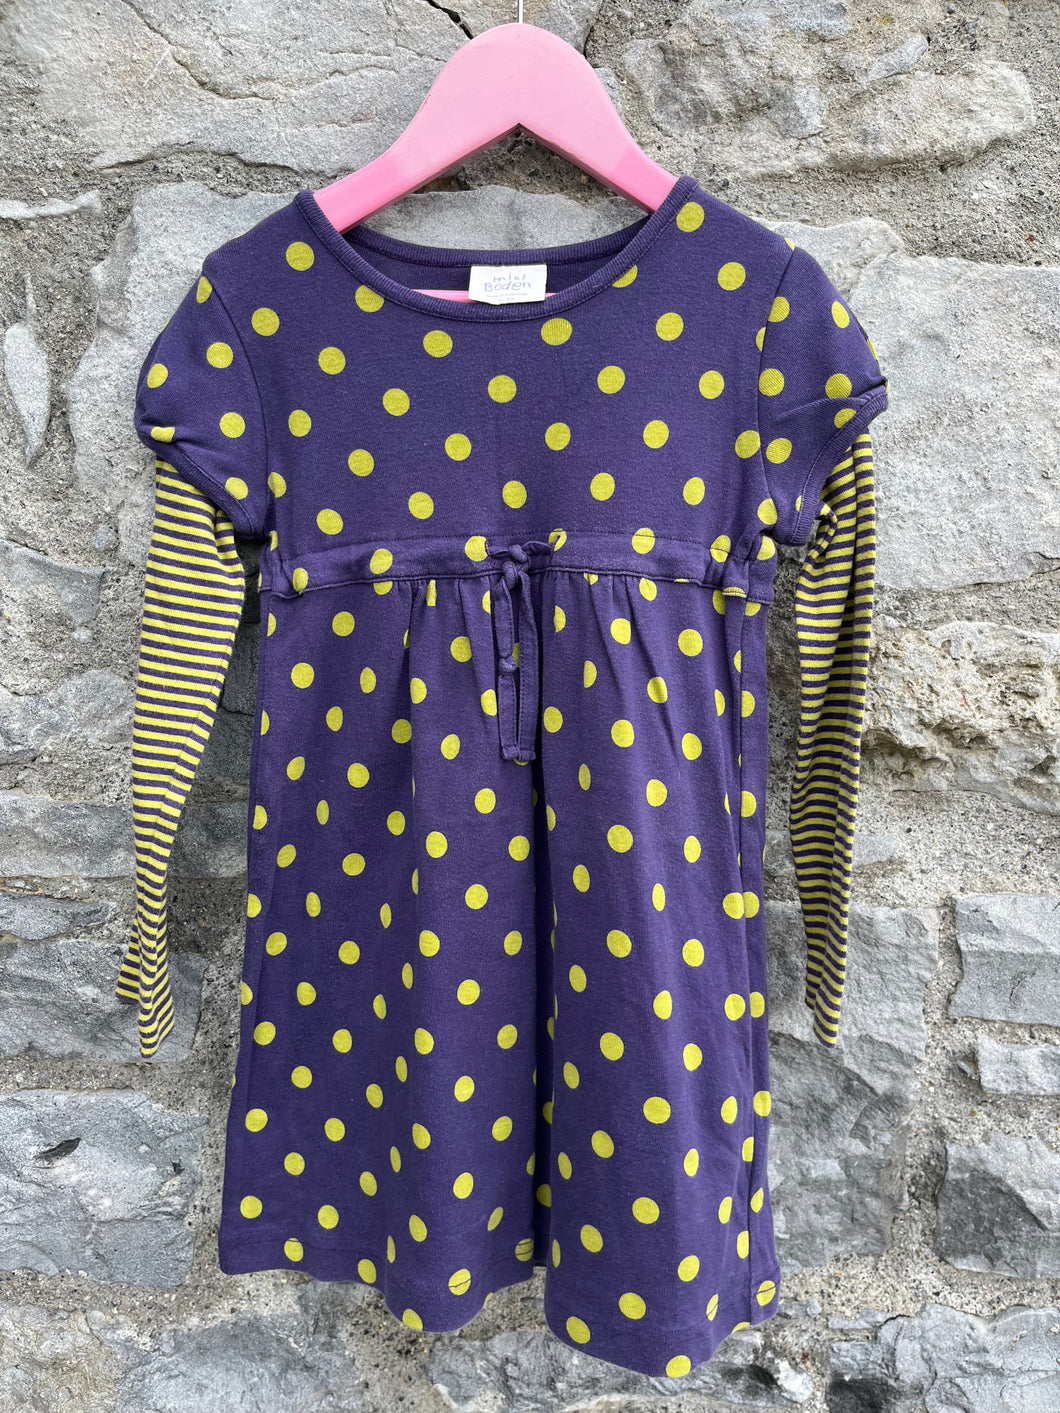 MB Purple polka dots&stripes dress  5-6y (110-116cm)